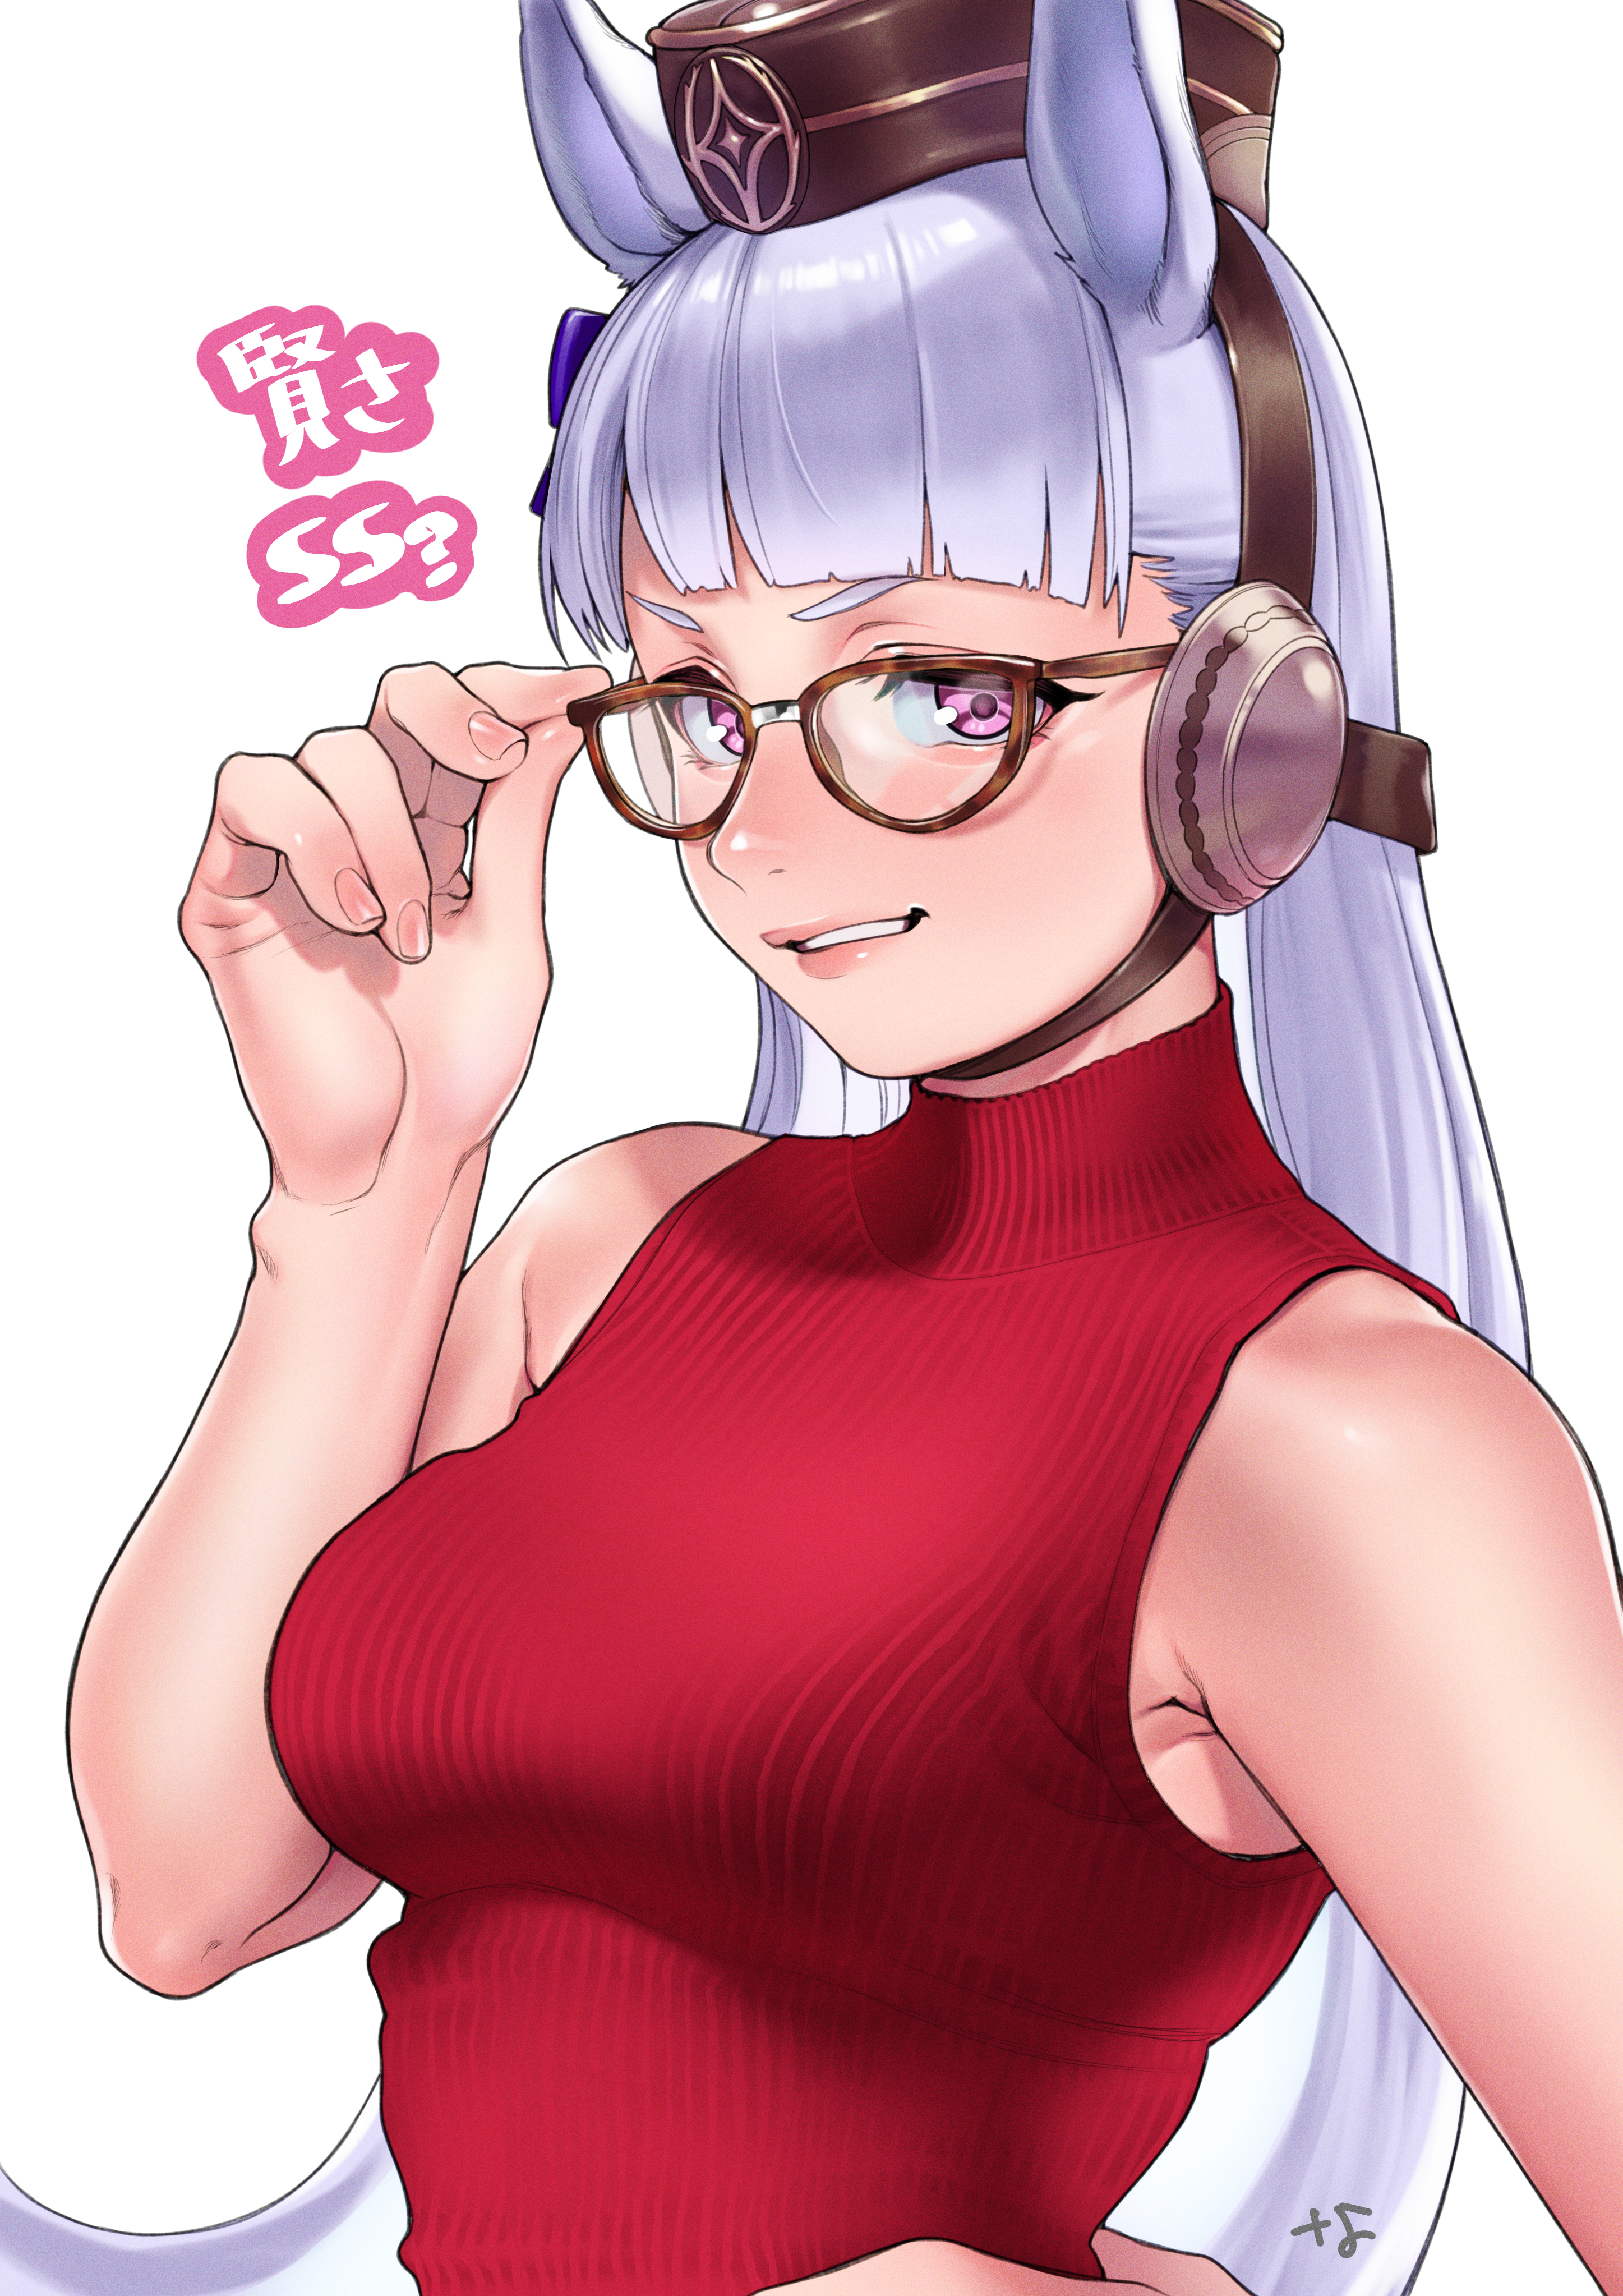 Uma Musume Pretty Derby Red Sweater Blunt Bangs Anime Girls Meganekko Sleeveless Simple Background P 2894x4093